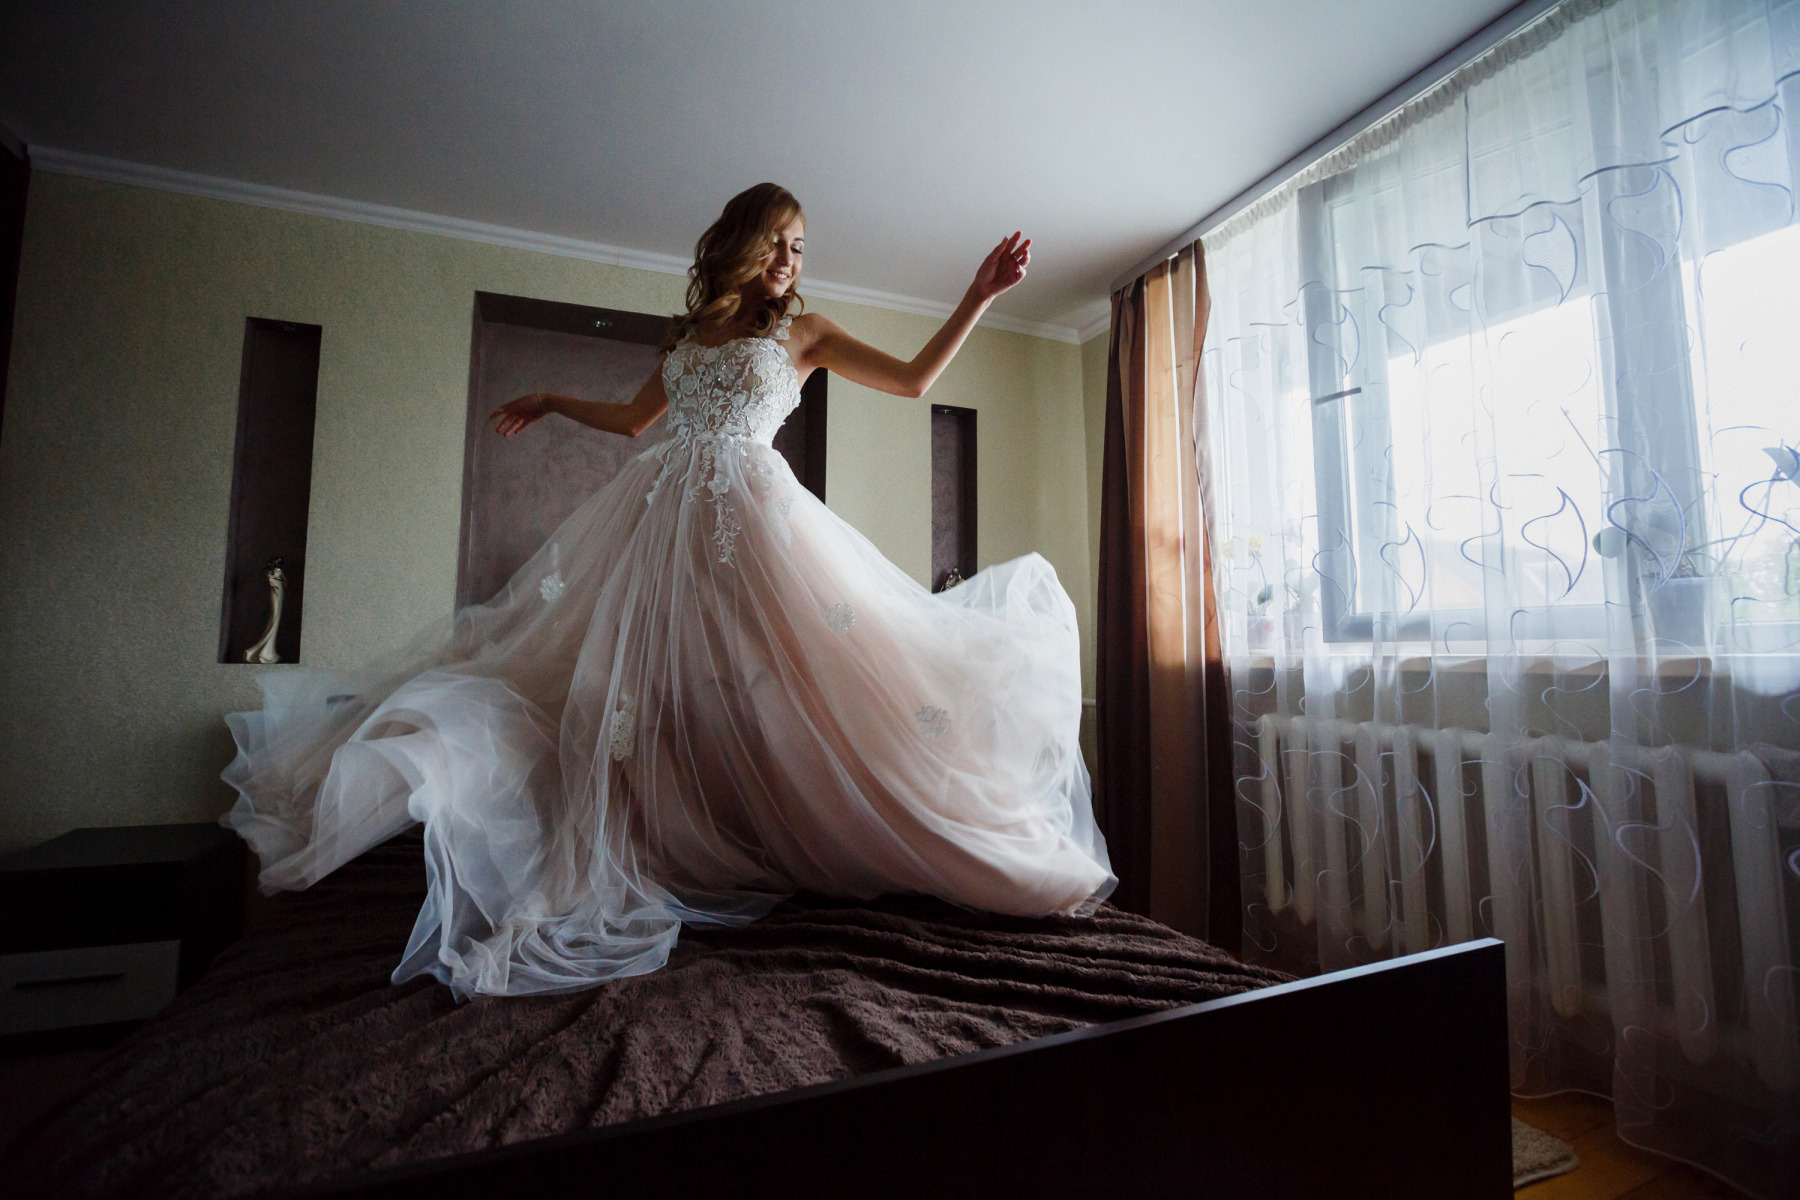 невеста | Фотограф Иван Мищук | foto.by фото.бай